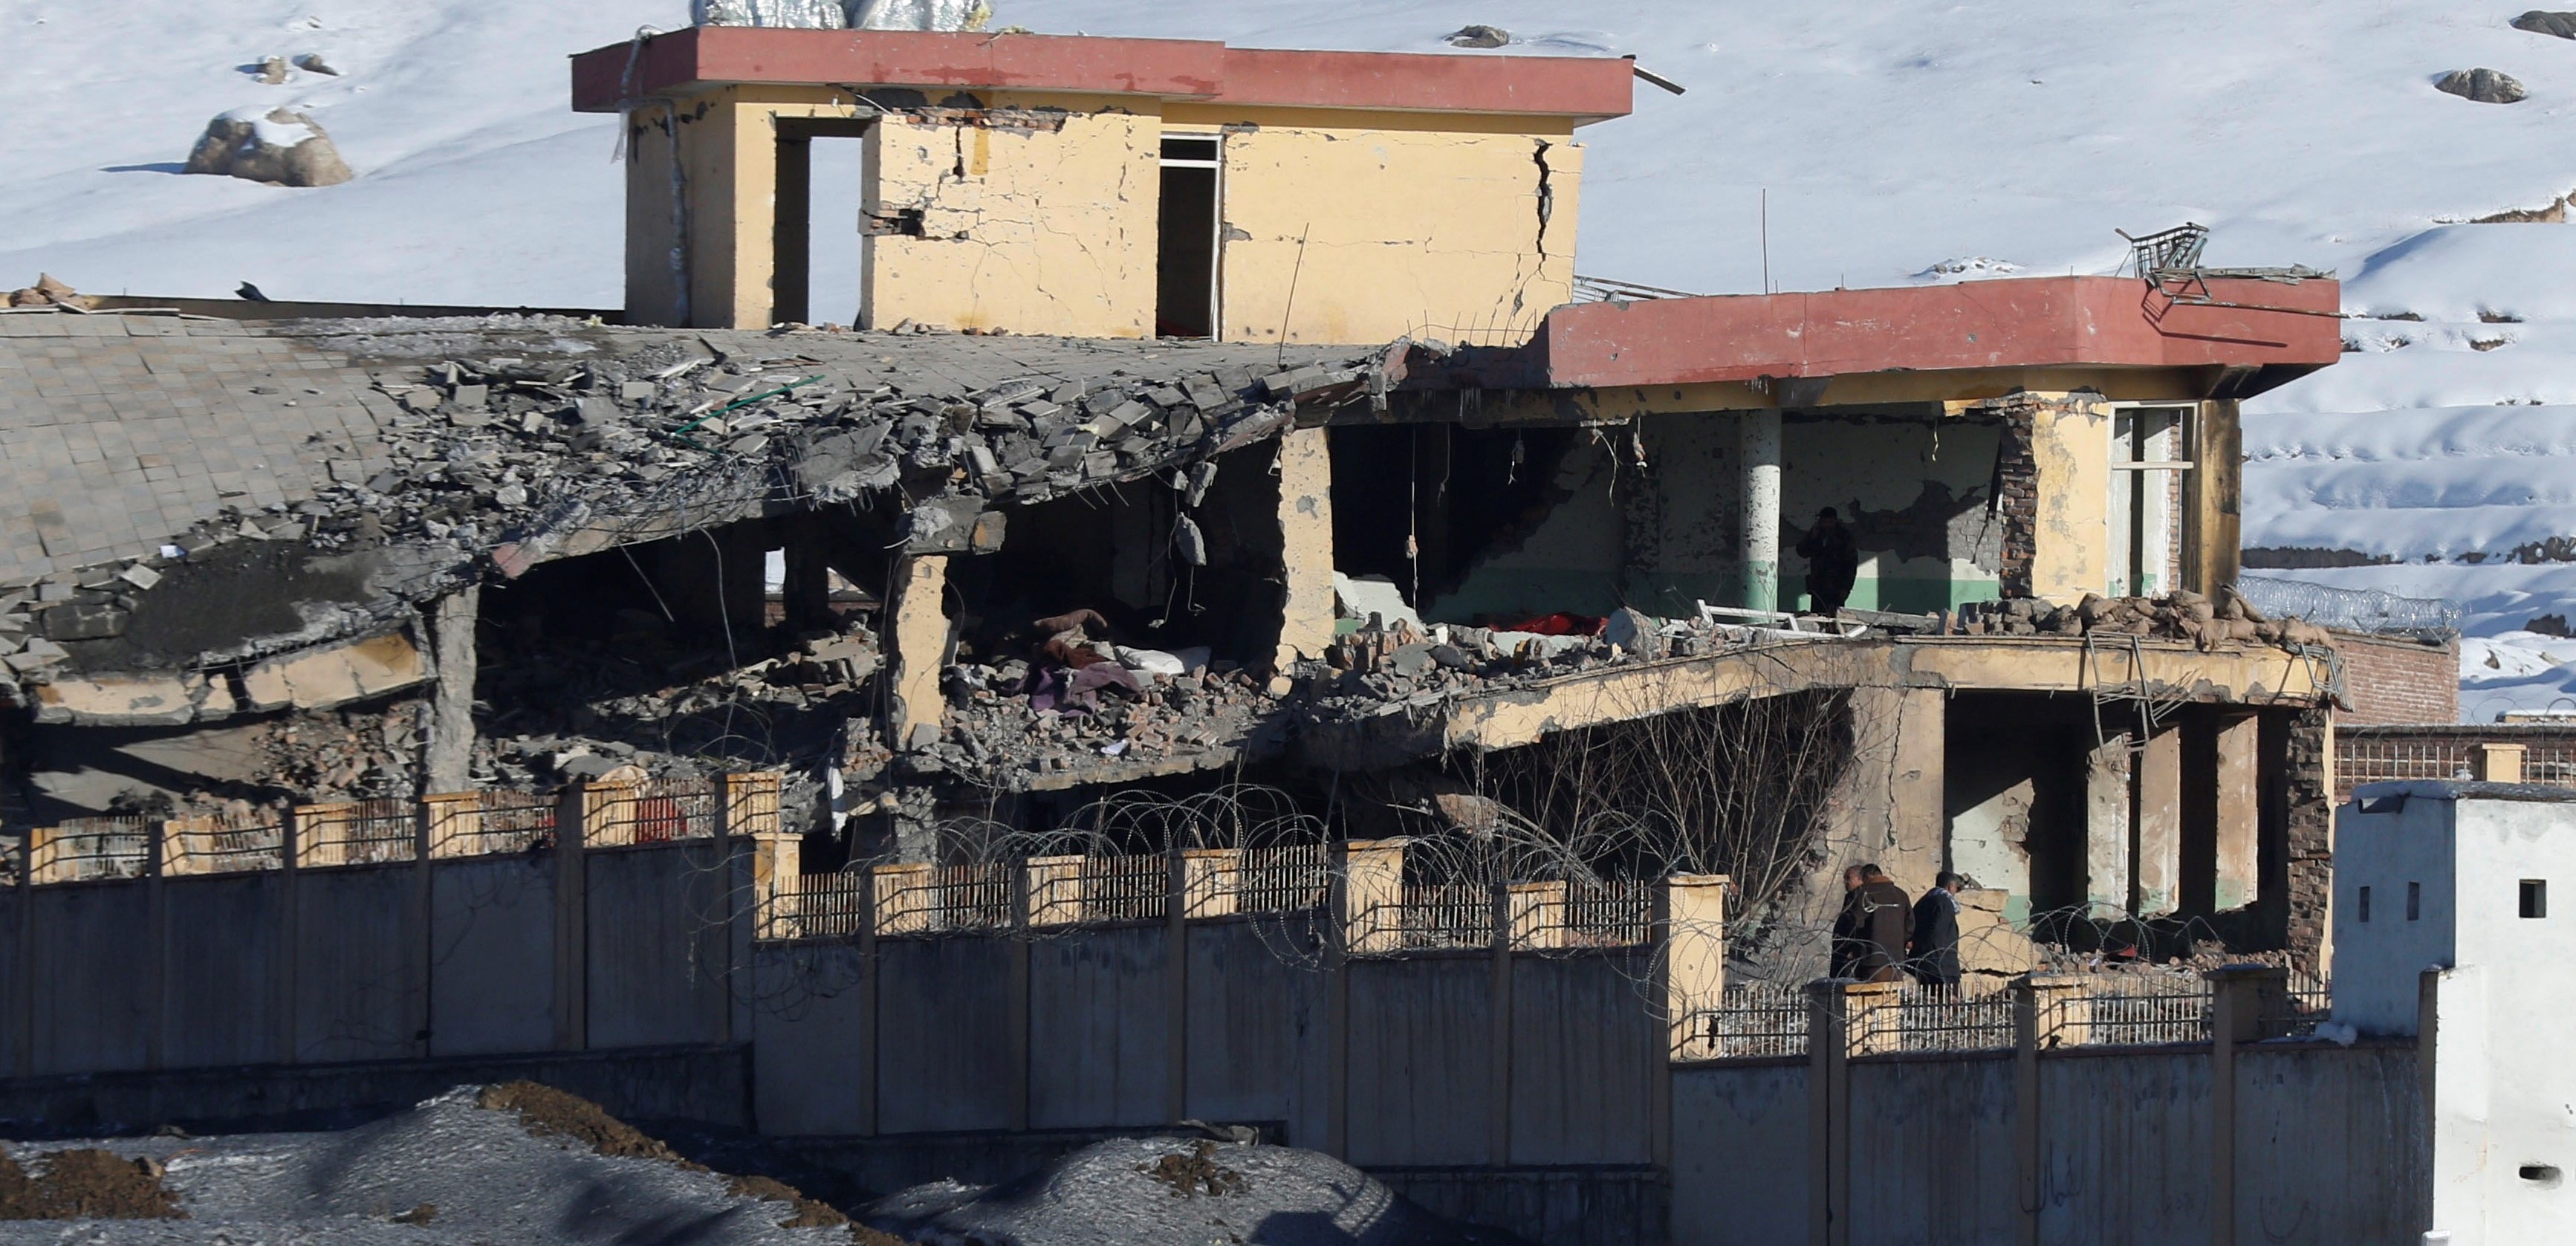 Afghanistan: Suicide bombing reported from Kunduz; 6 killed - report